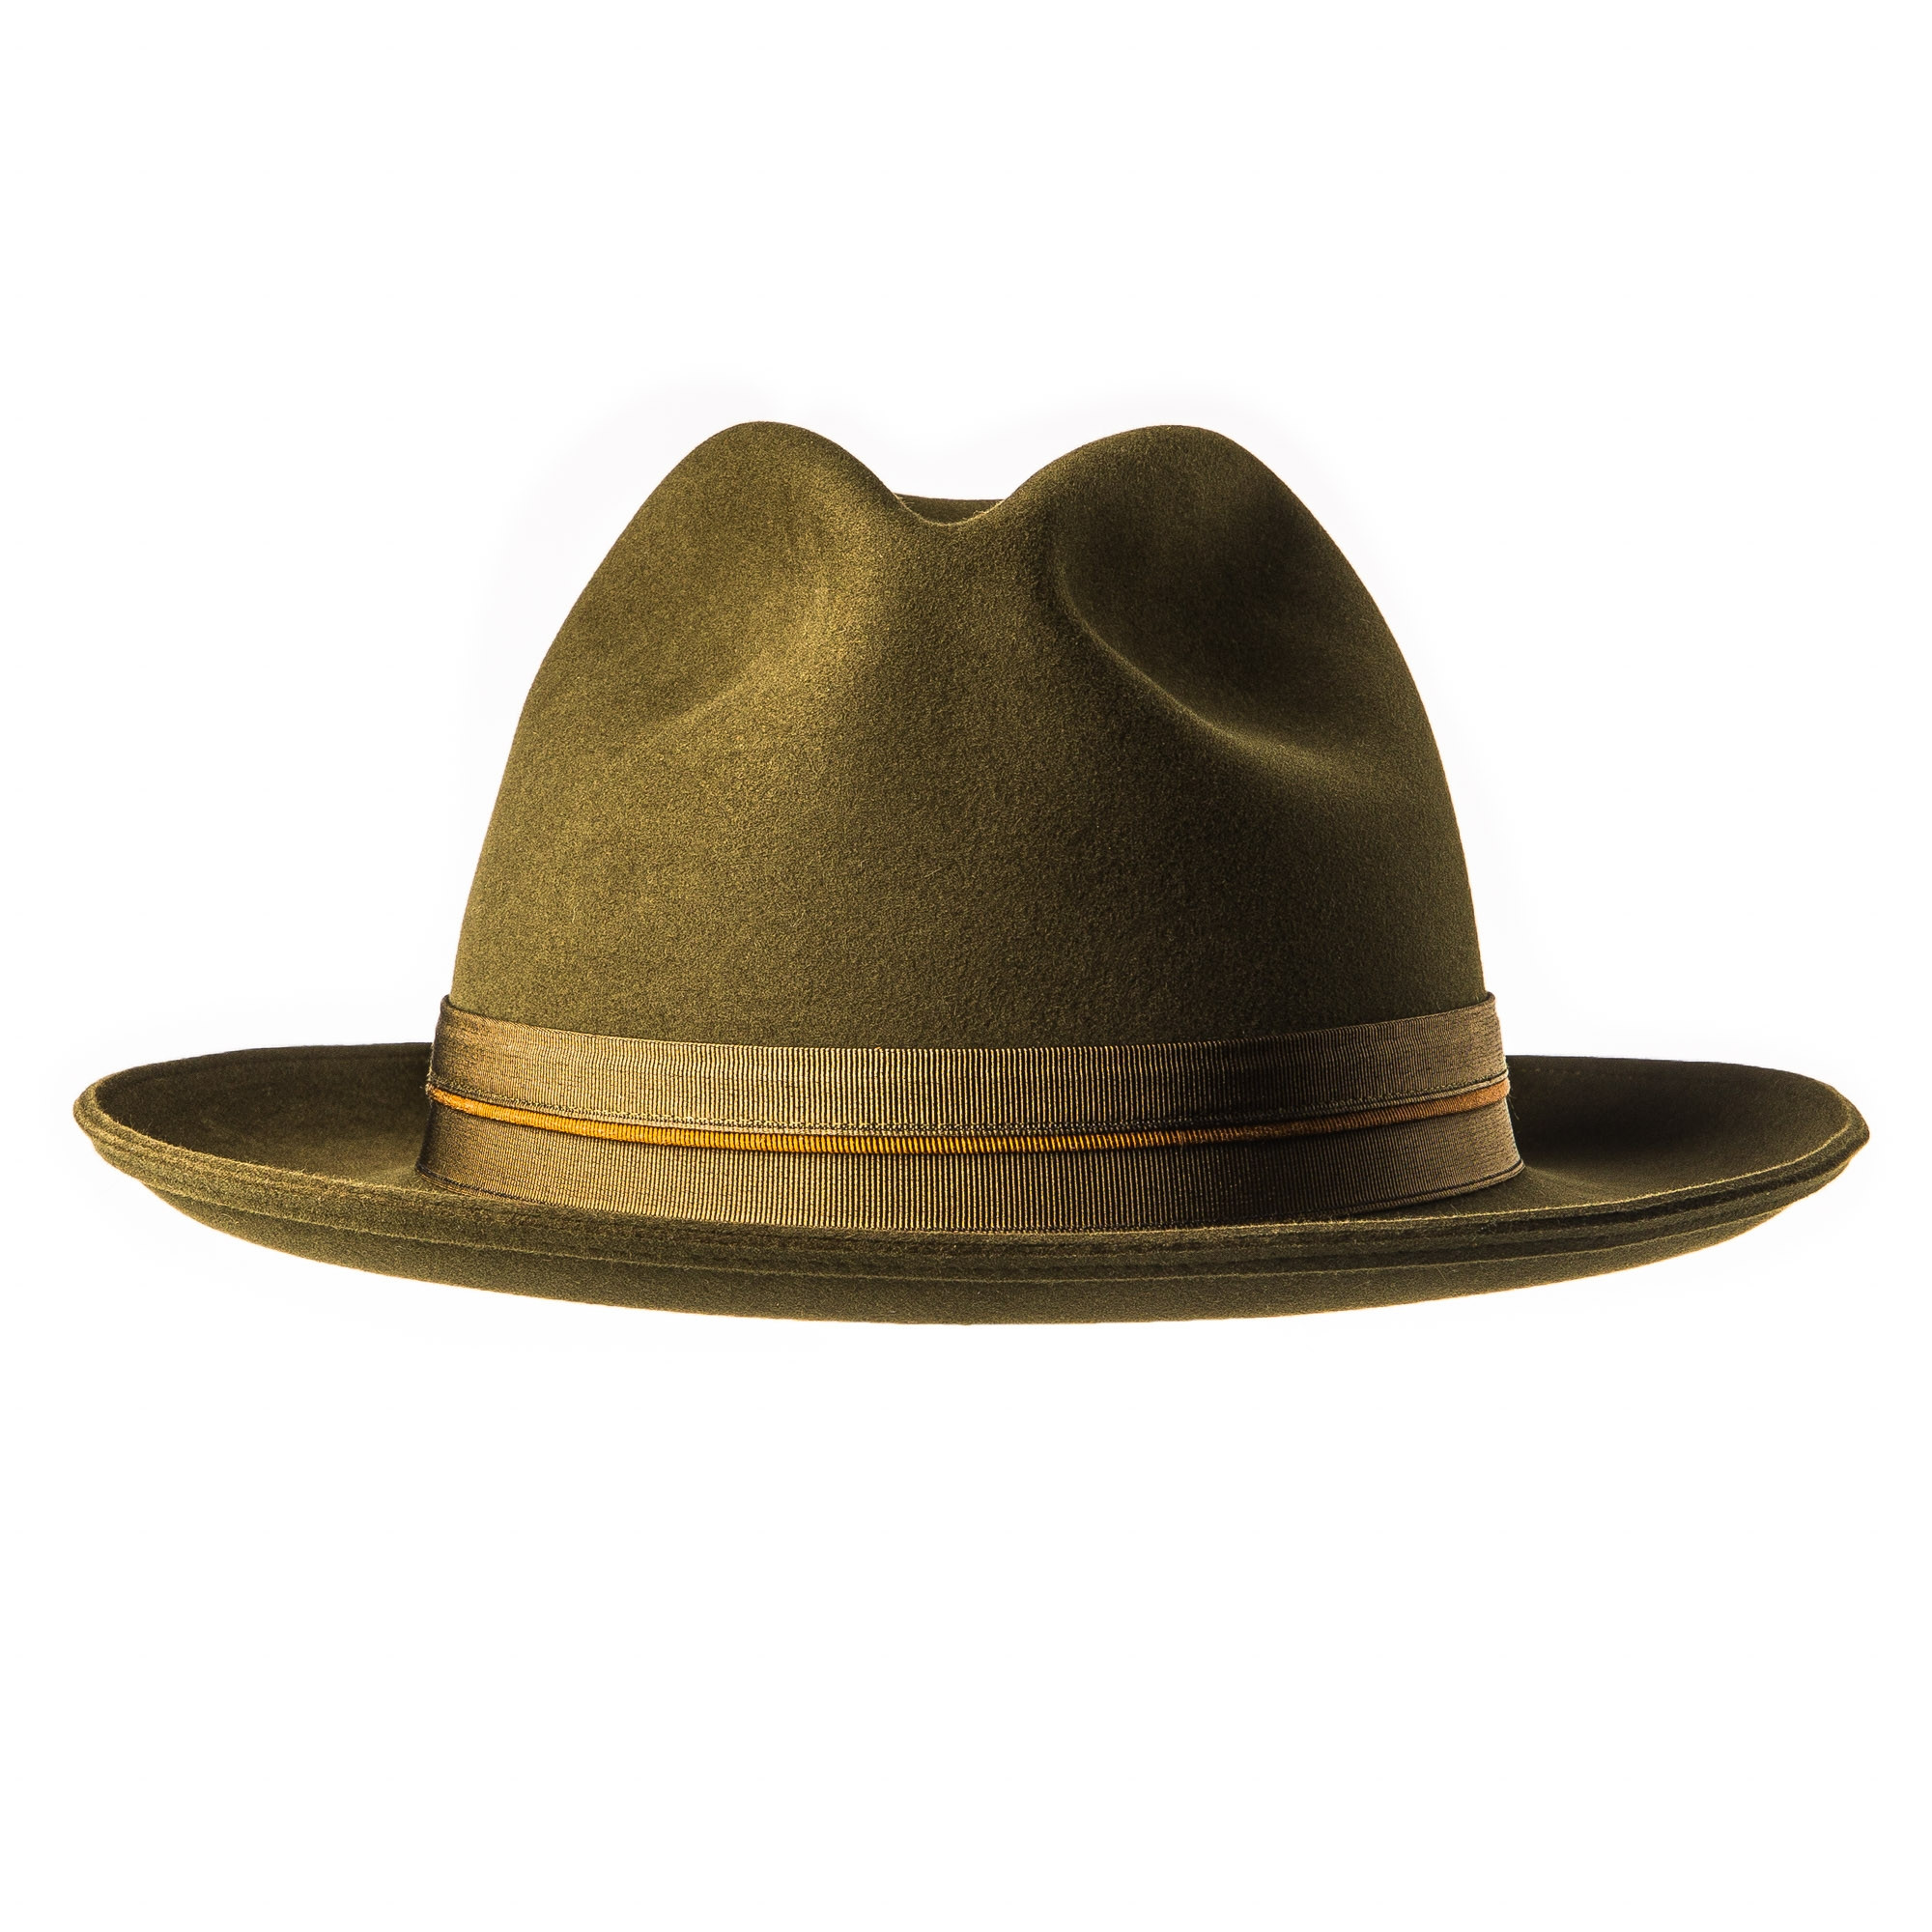 Виски шляпа. Фасоны шляп мужских. Шляпа вид сверху. Шляпа кабана. Шляпа Федора валяние.